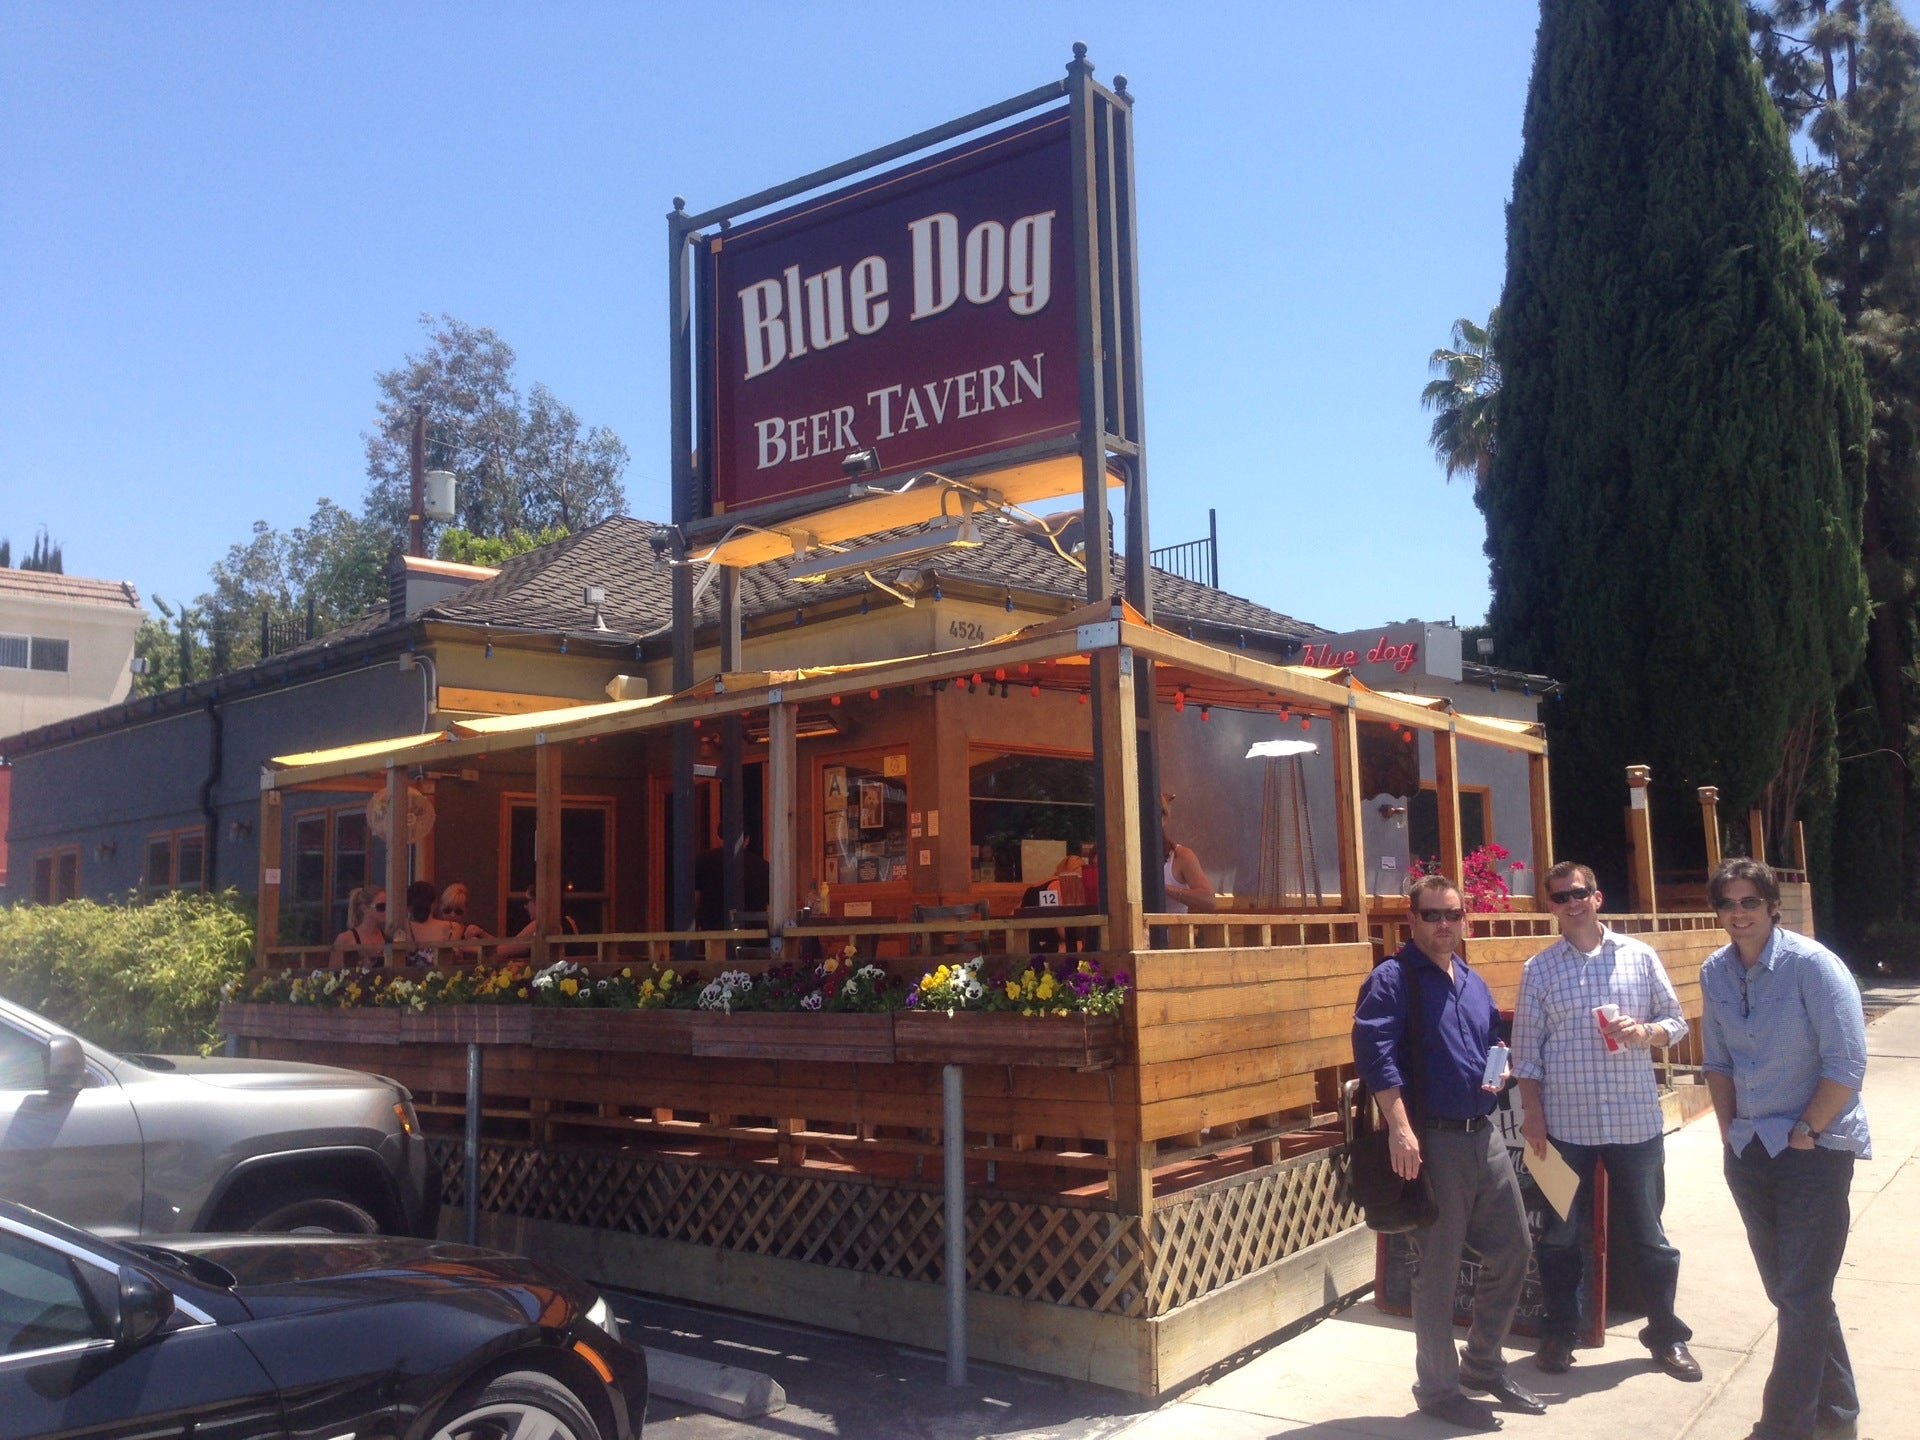 The Blue Dog Beer Tavern